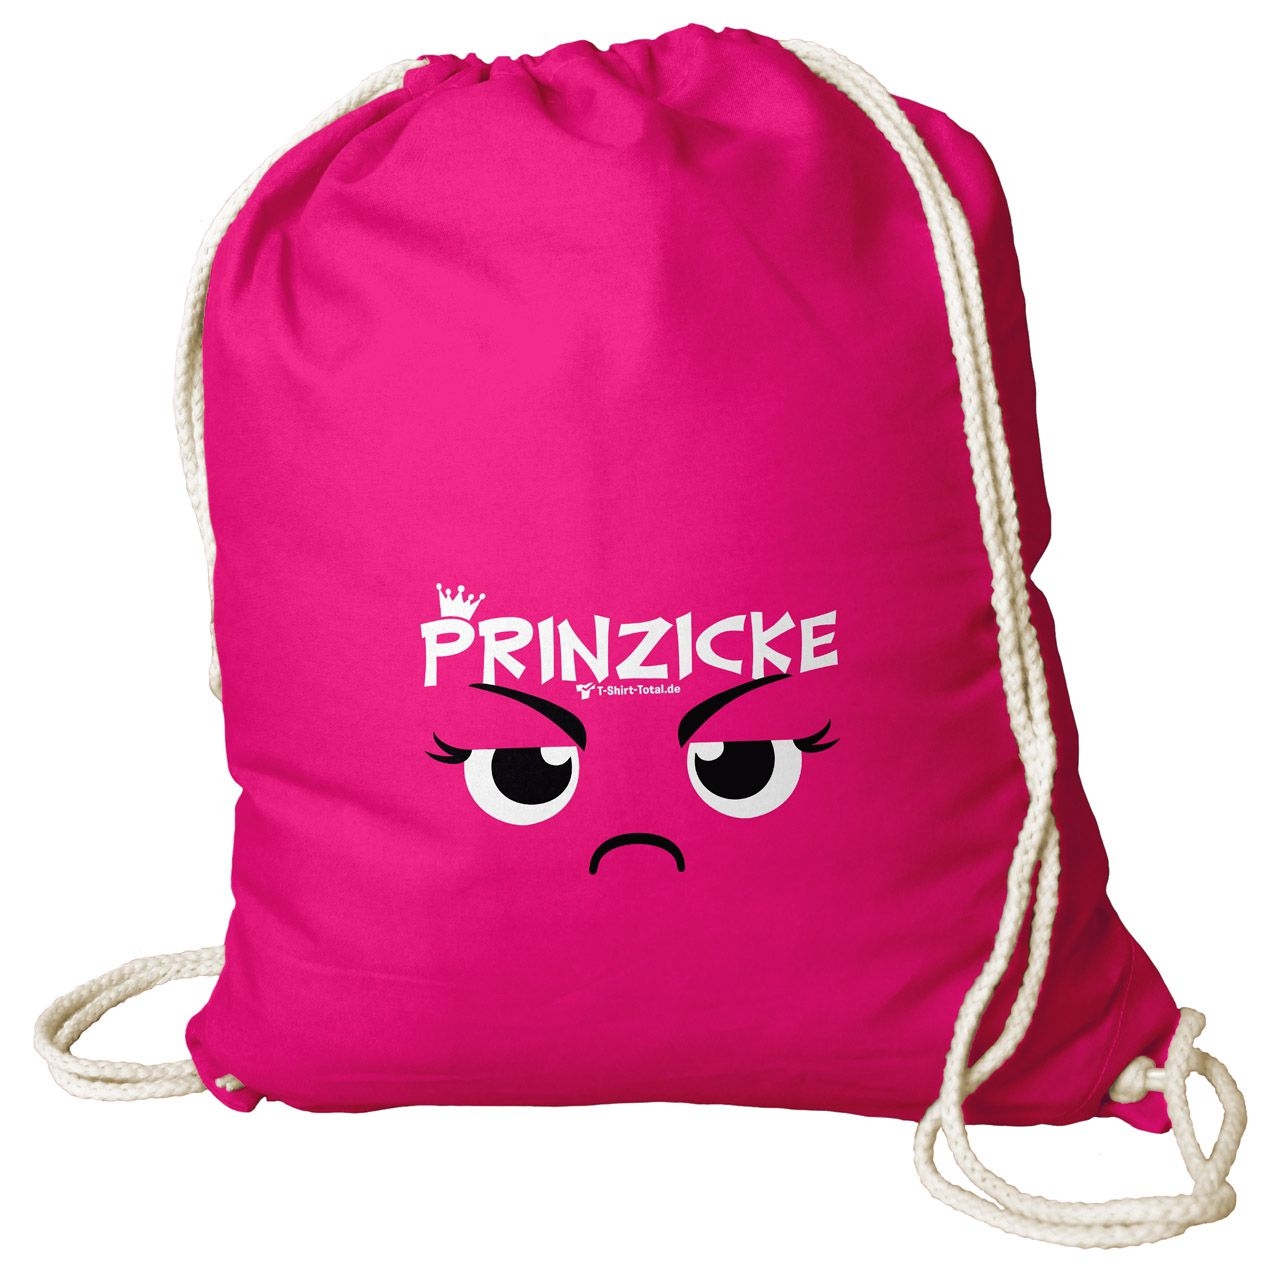 Prinzicke Rucksack Beutel pink